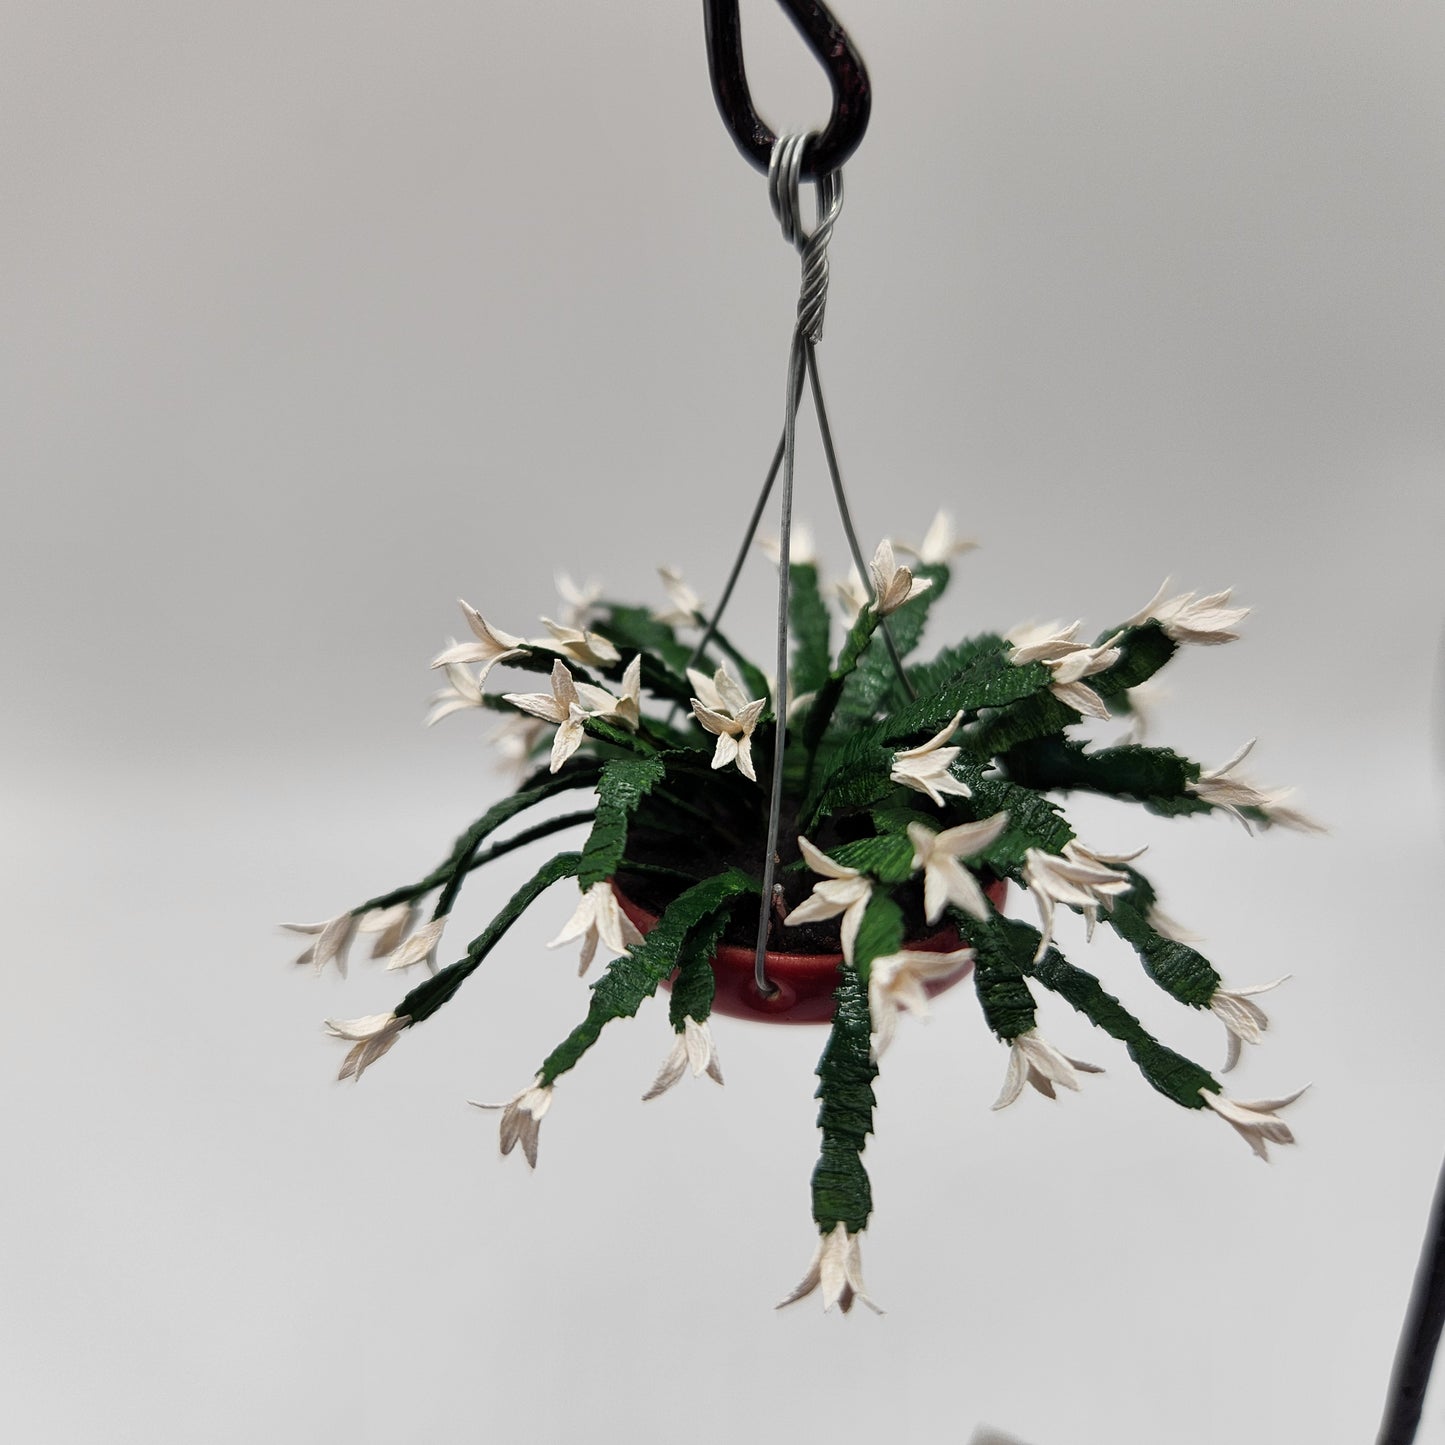 Hanging Christmas Cactus - White